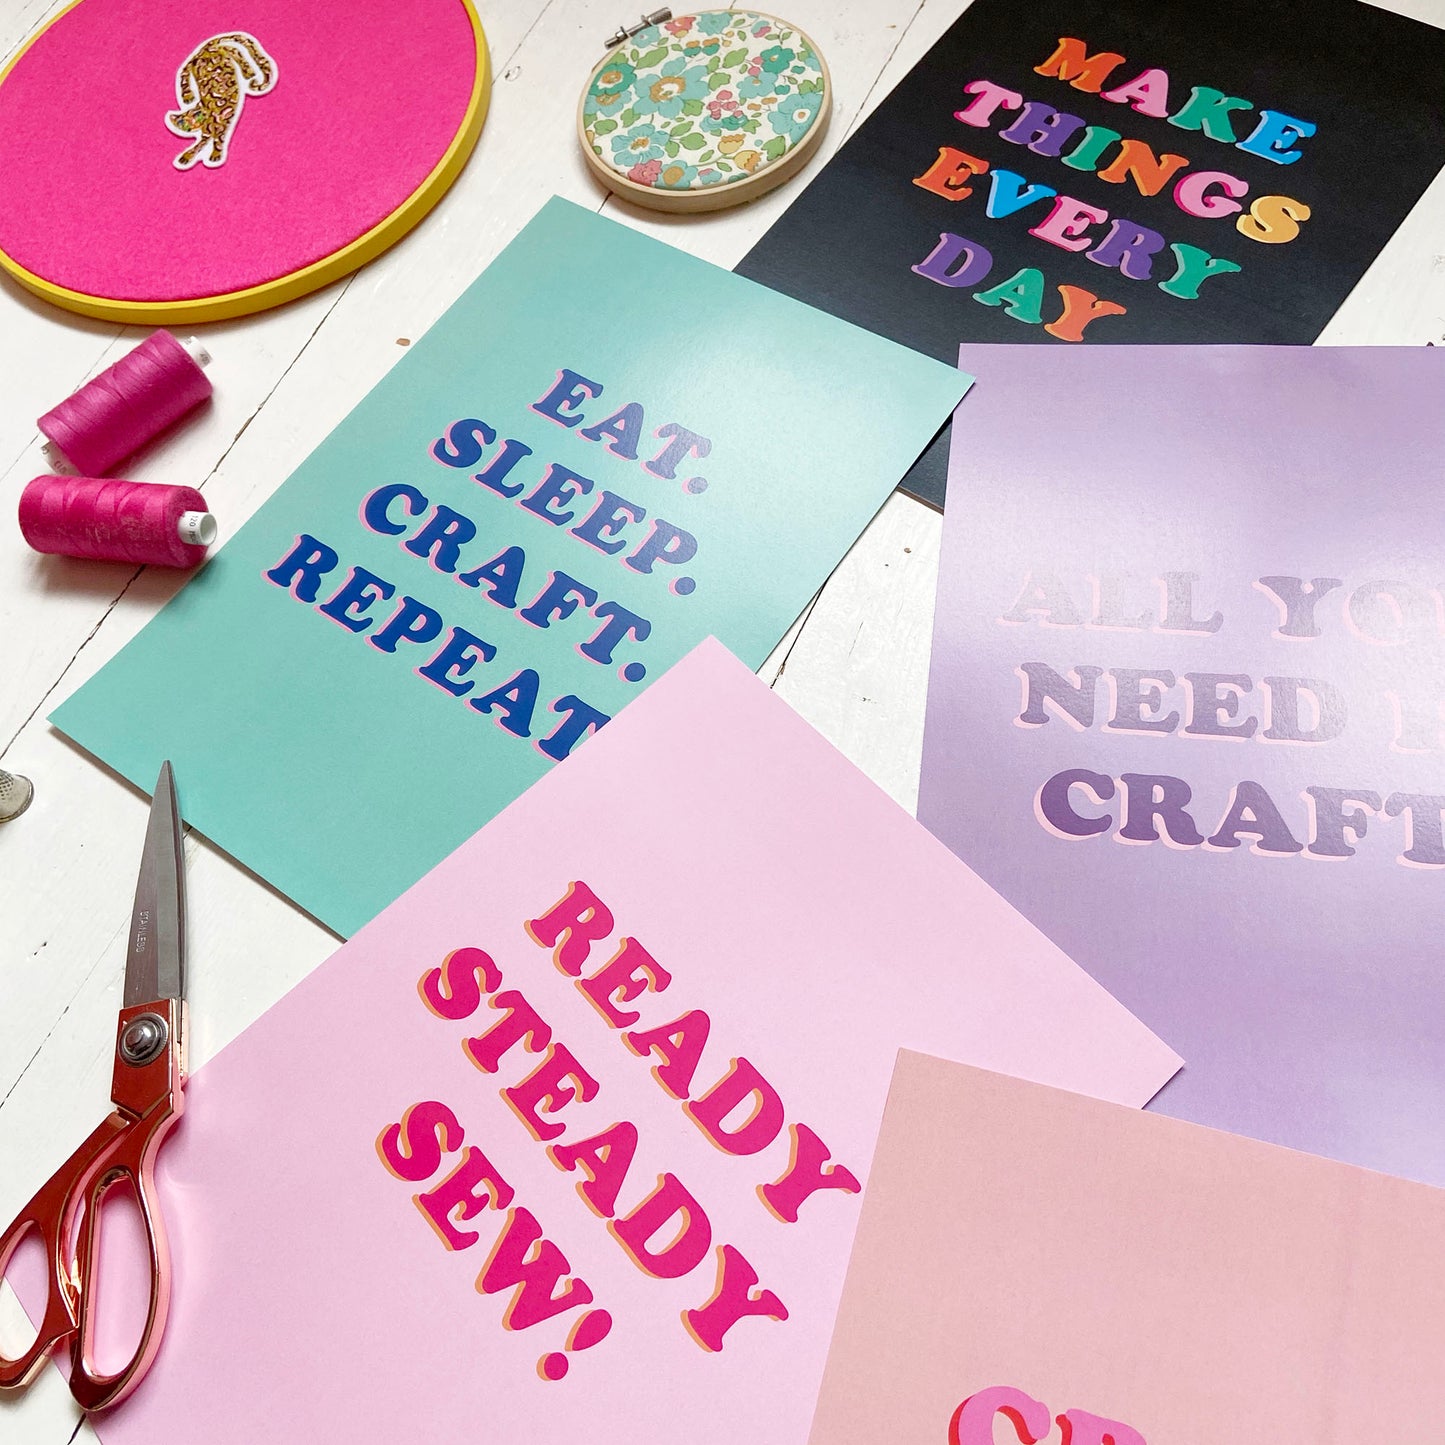 'Ready, Steady, Sew!' Retro A4 Print kit